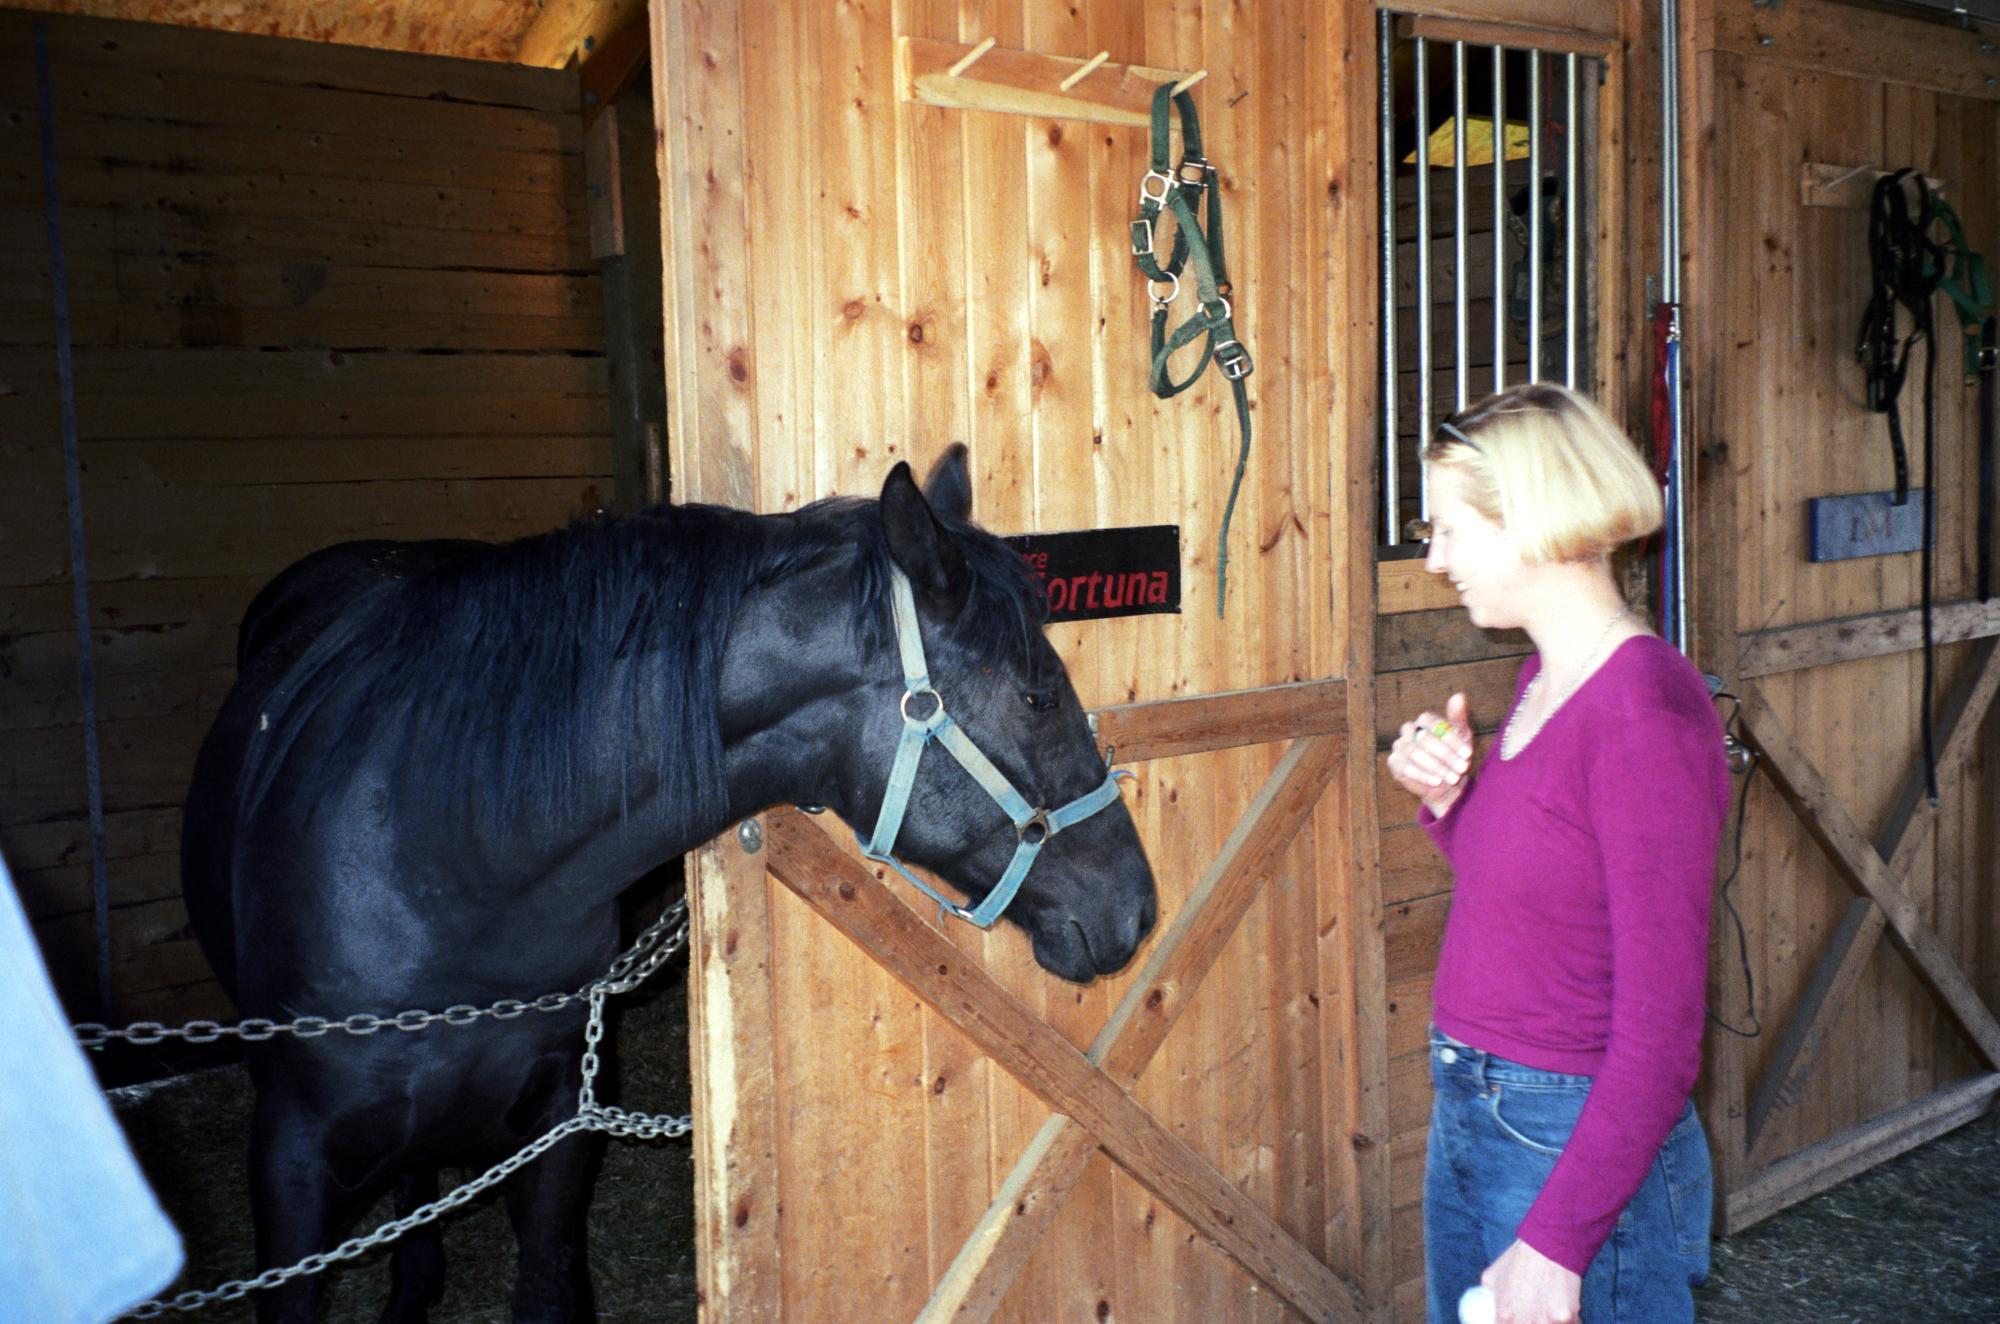 Western Washington - Brigitte Horse